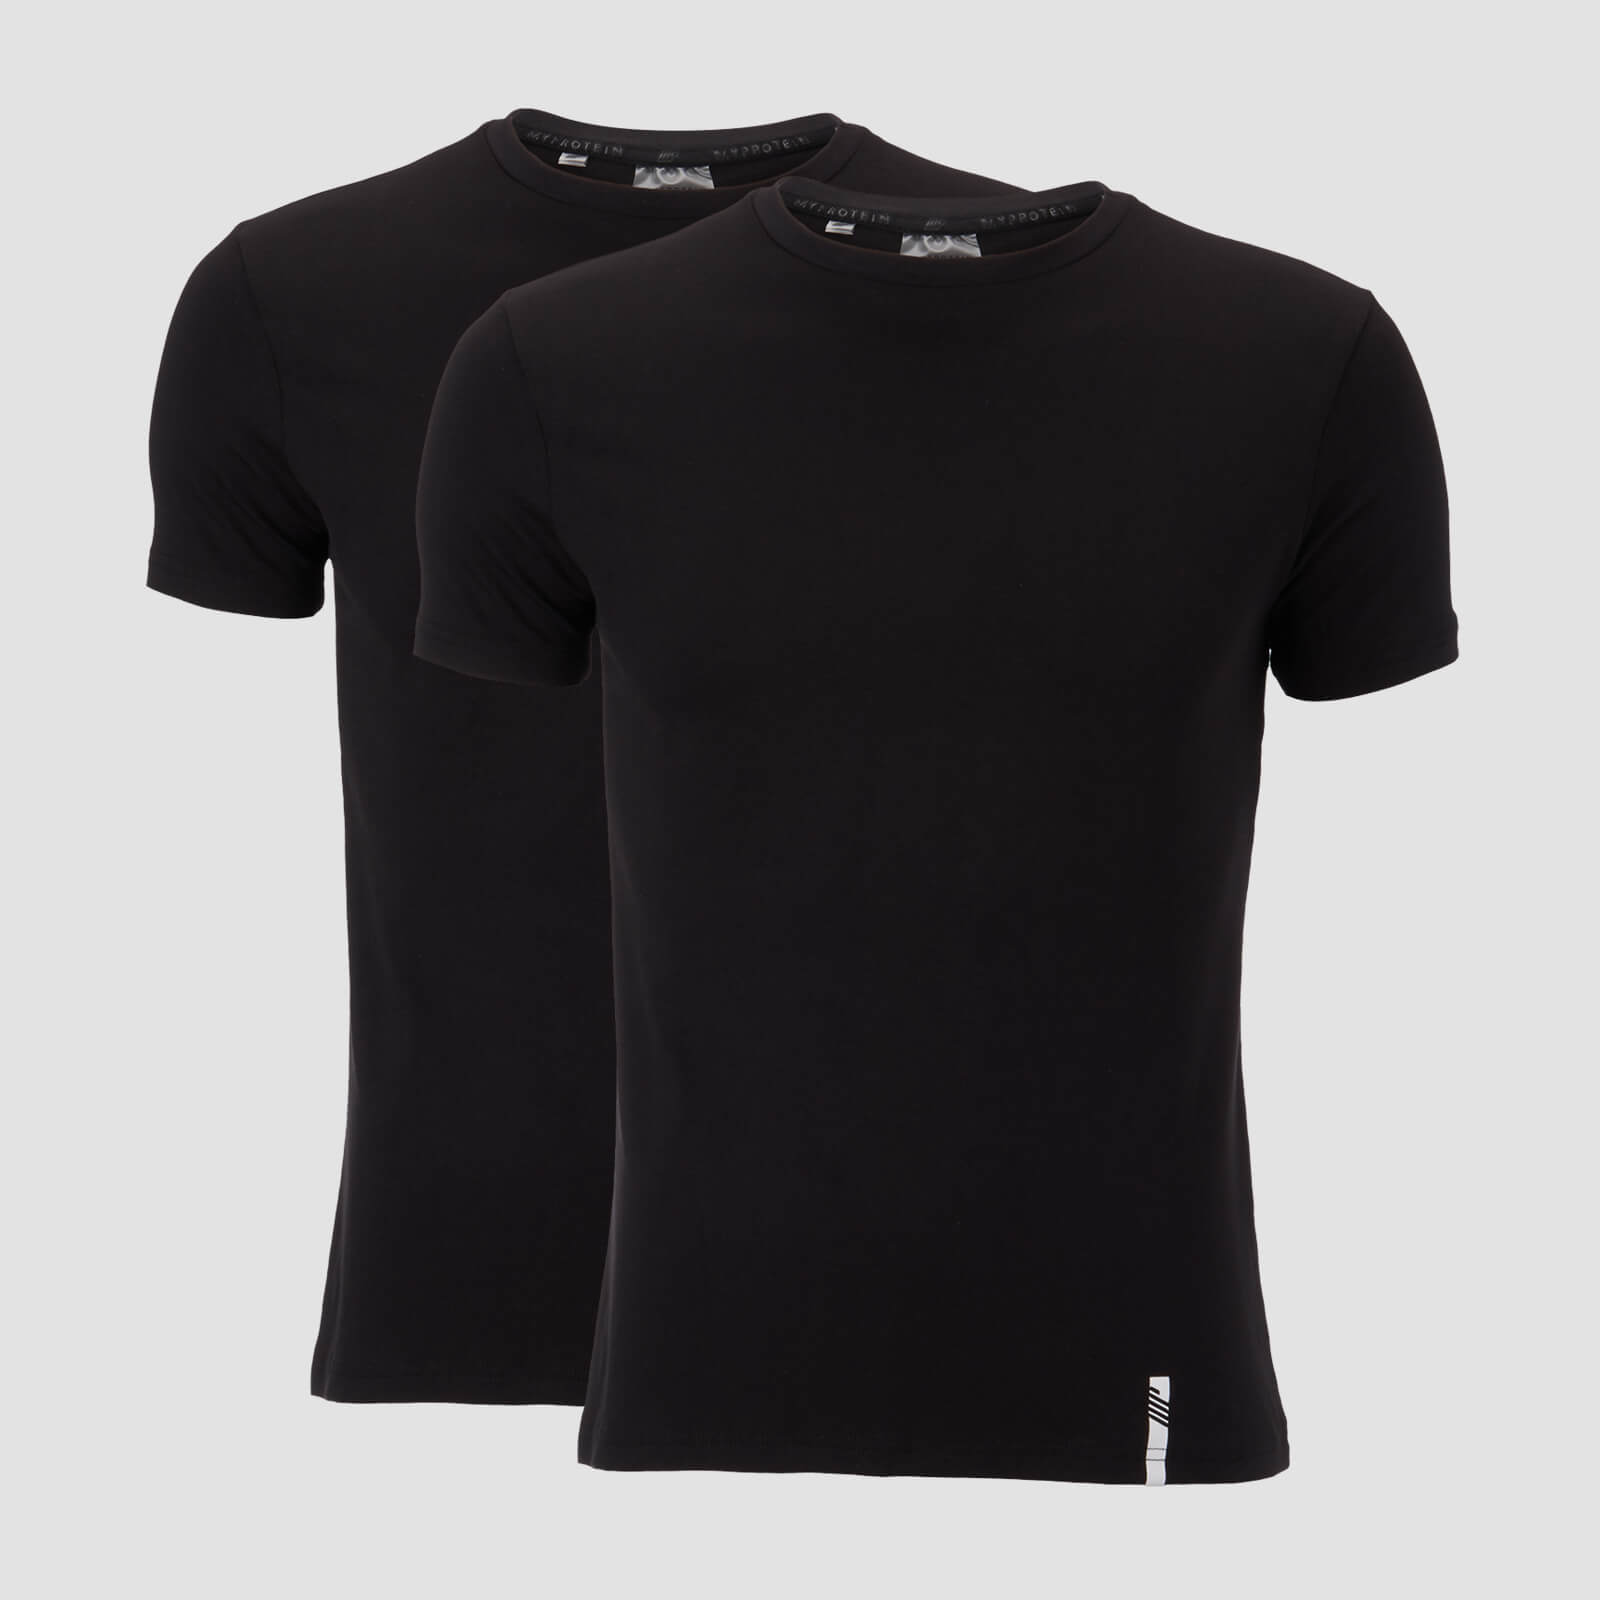 MP Men's Luxe Classic Crew T-Shirt - Black/Black (2 Pack) - XS